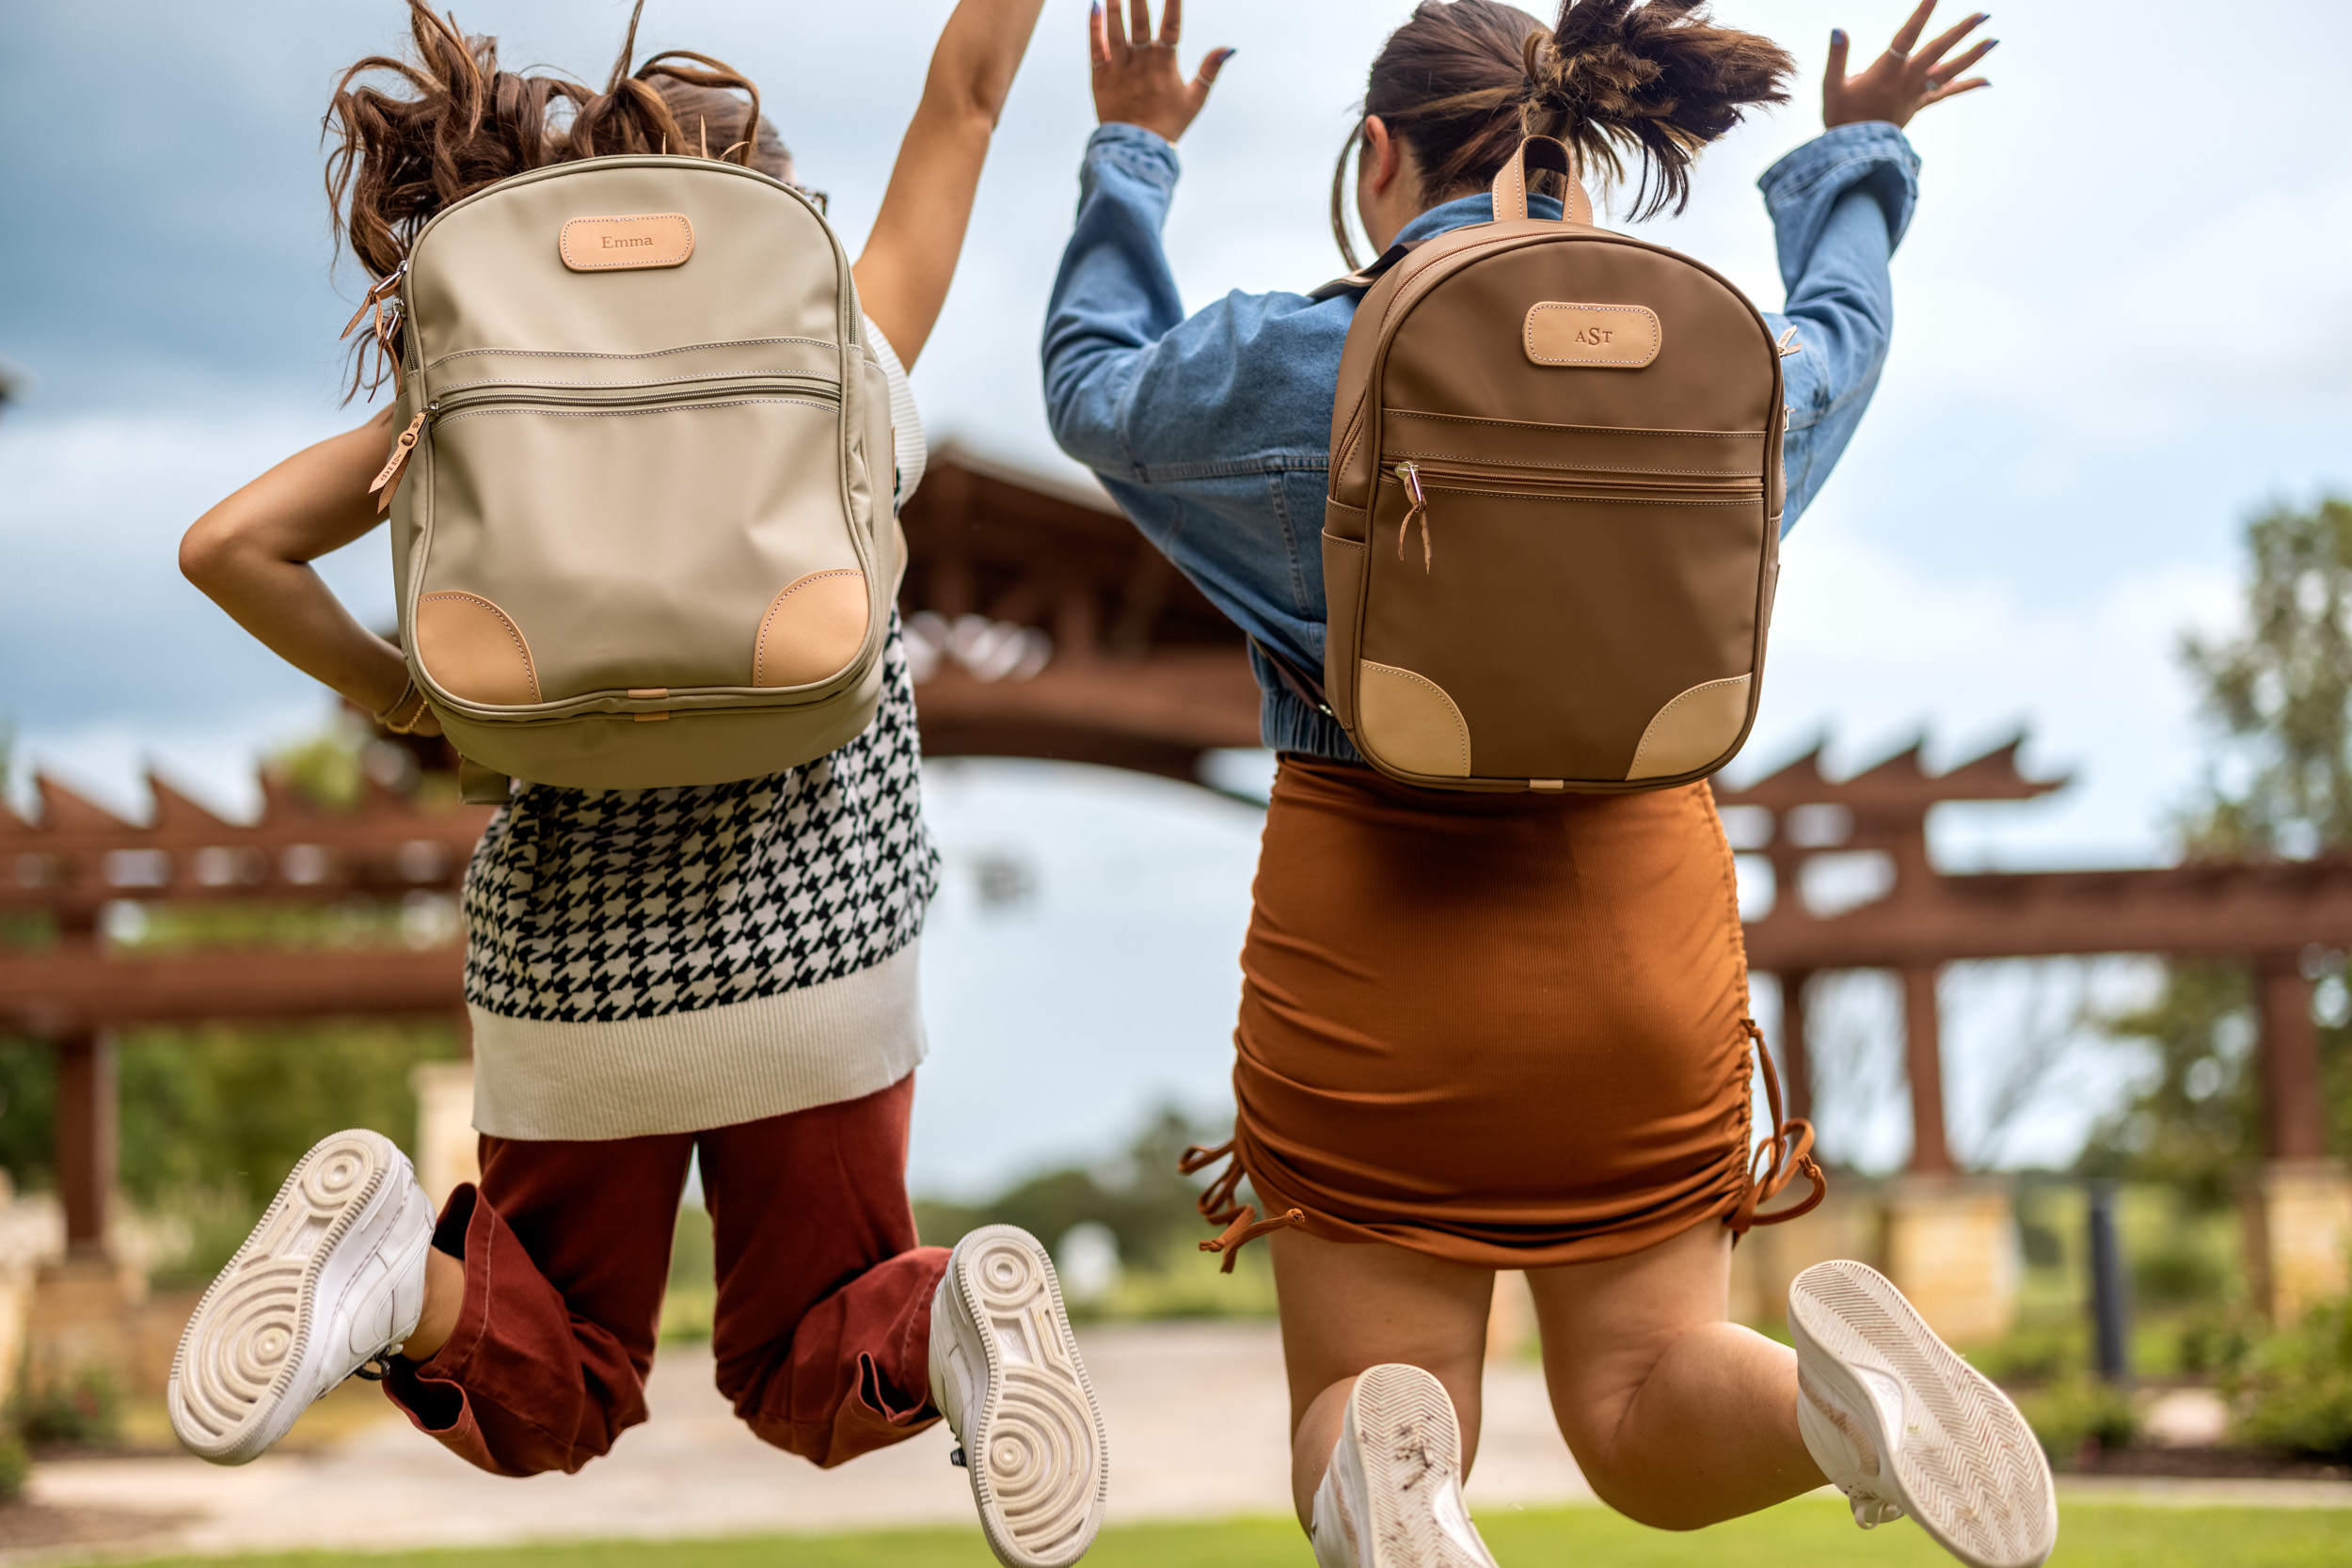 two girls jump in air wearing jon hart backpacks